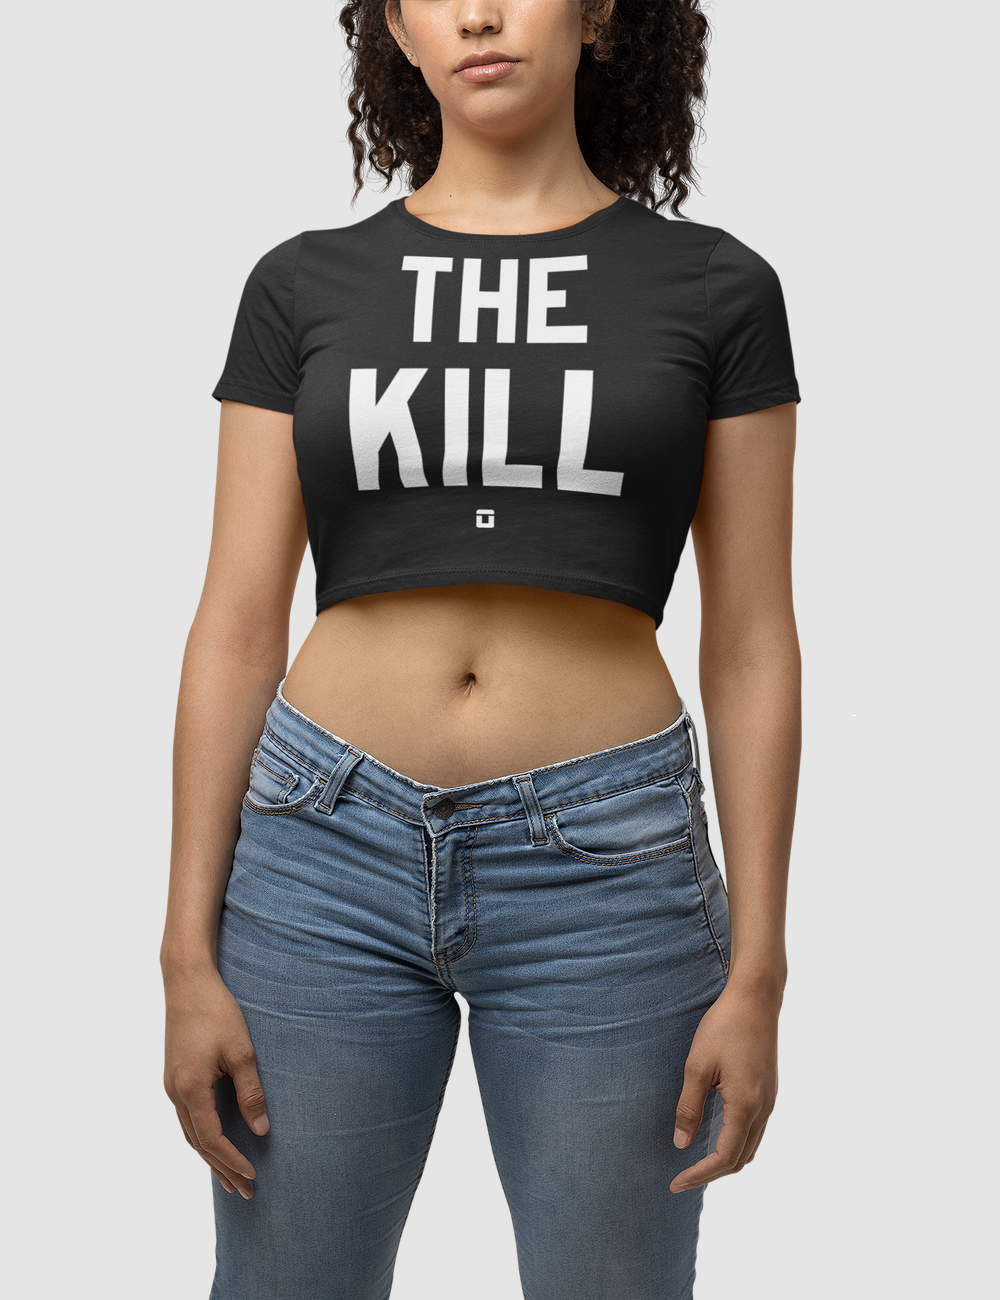 The Kill | Women's Fitted Crop Top T-Shirt OniTakai